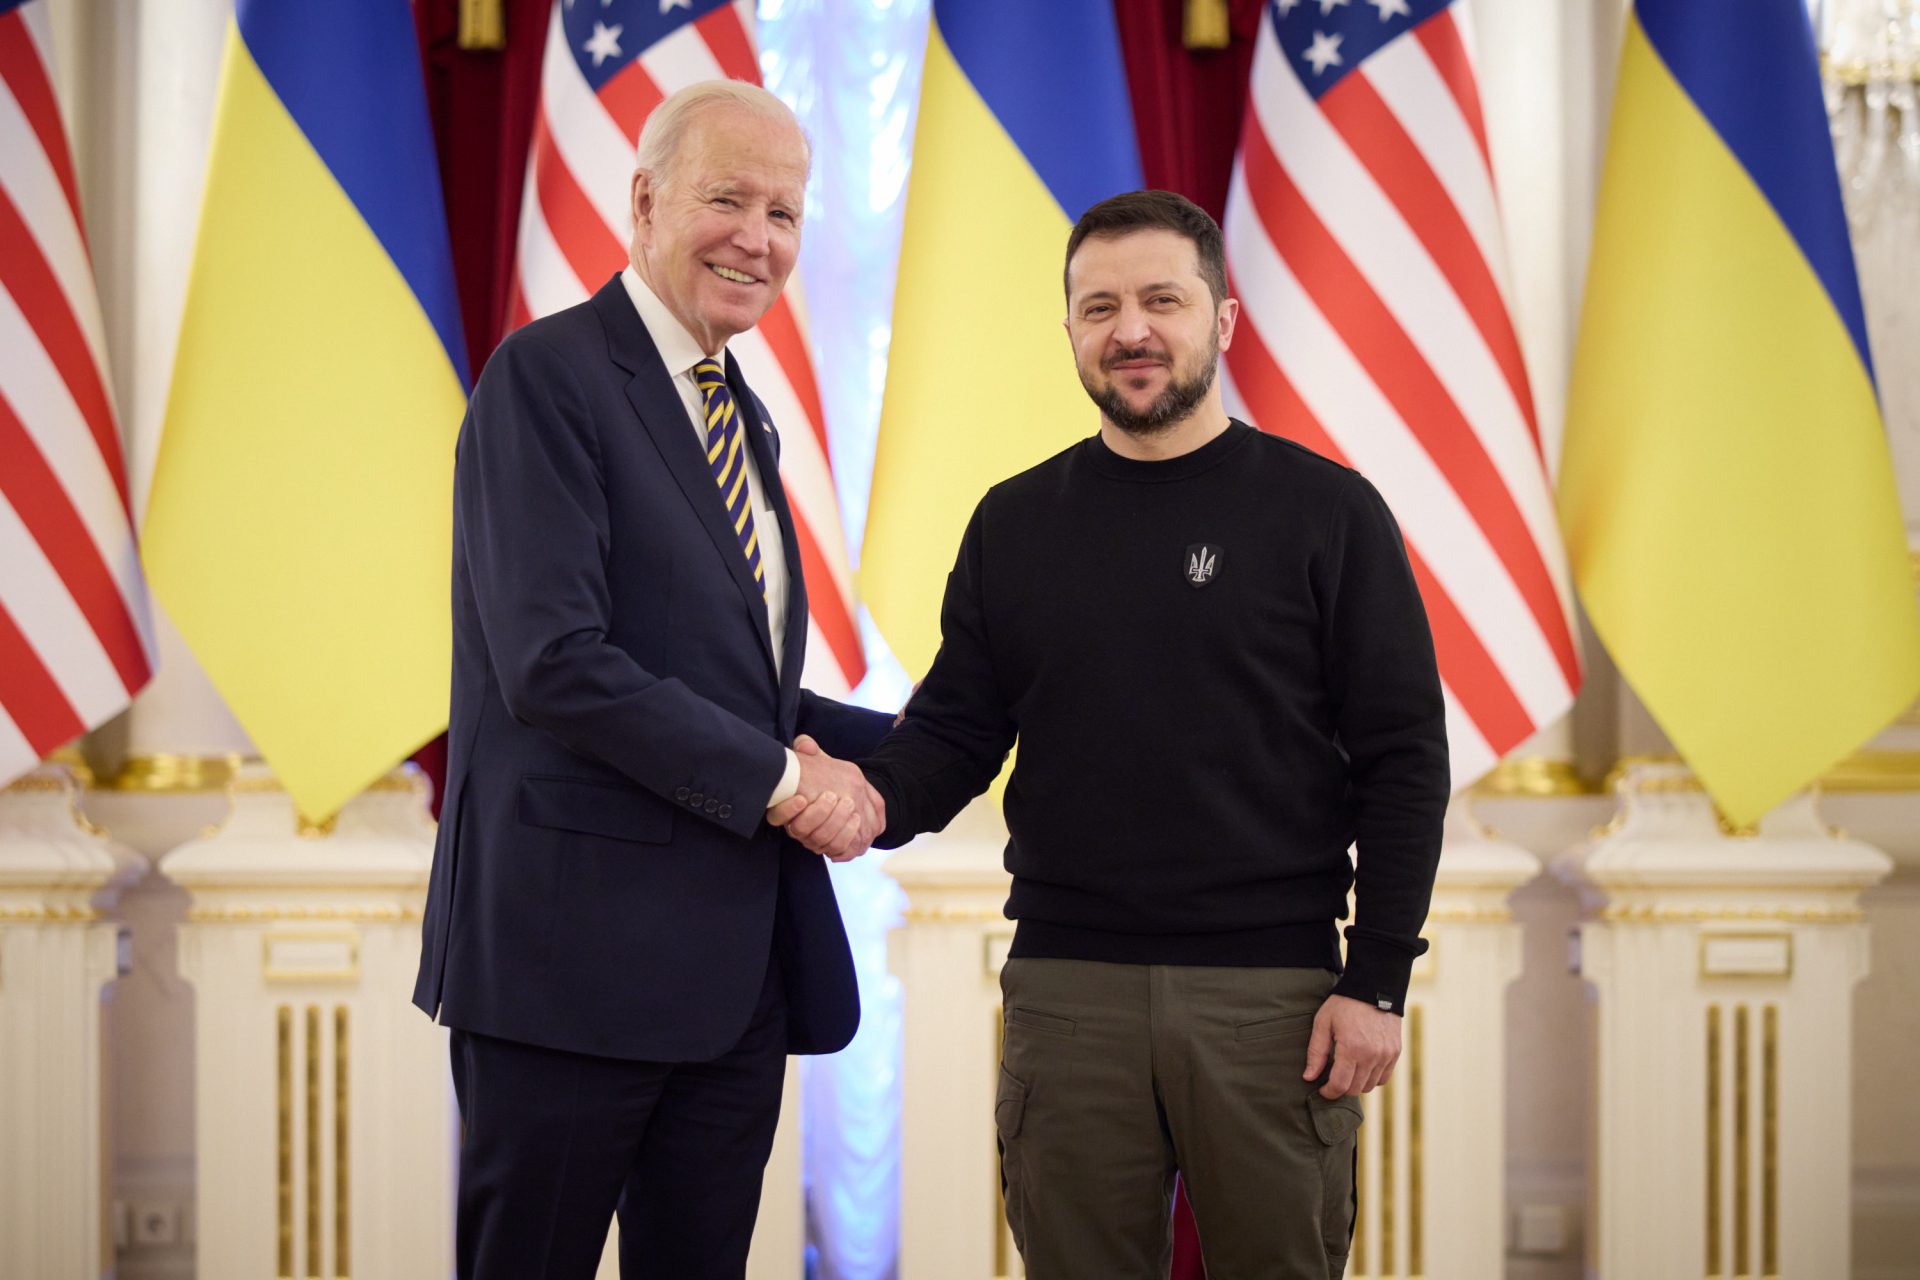 Remembering Biden's surprise trip to war-torn Ukraine that strengthened US resolve